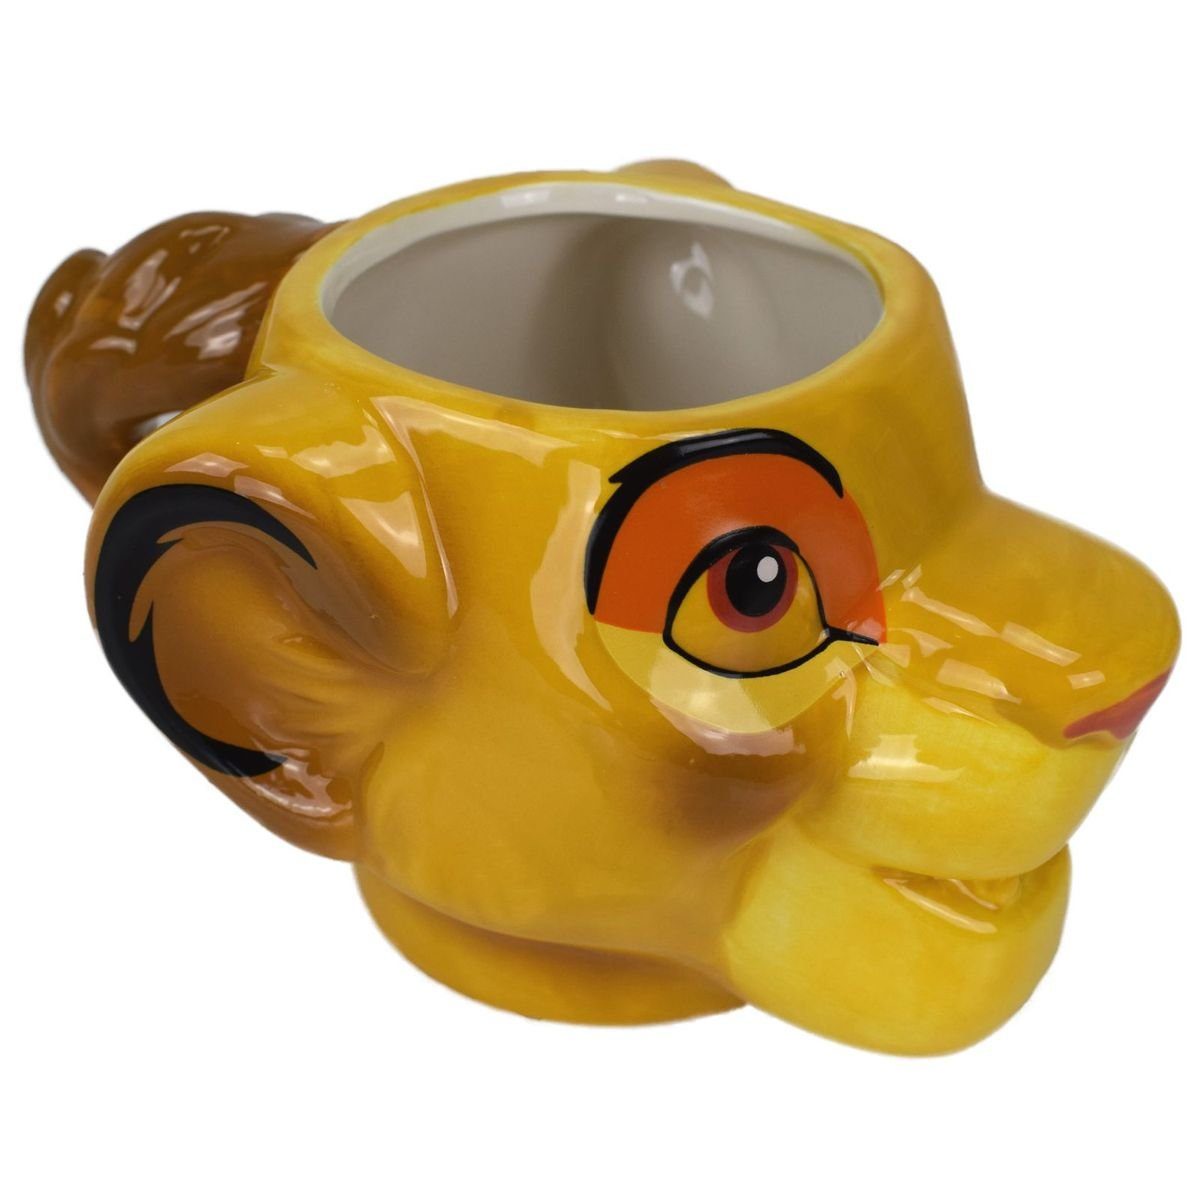 Löwen Motivtasse Keramiktasse Becher, Keramik, Simba Disneys Tasse der Stor 3D 3D Kopf König